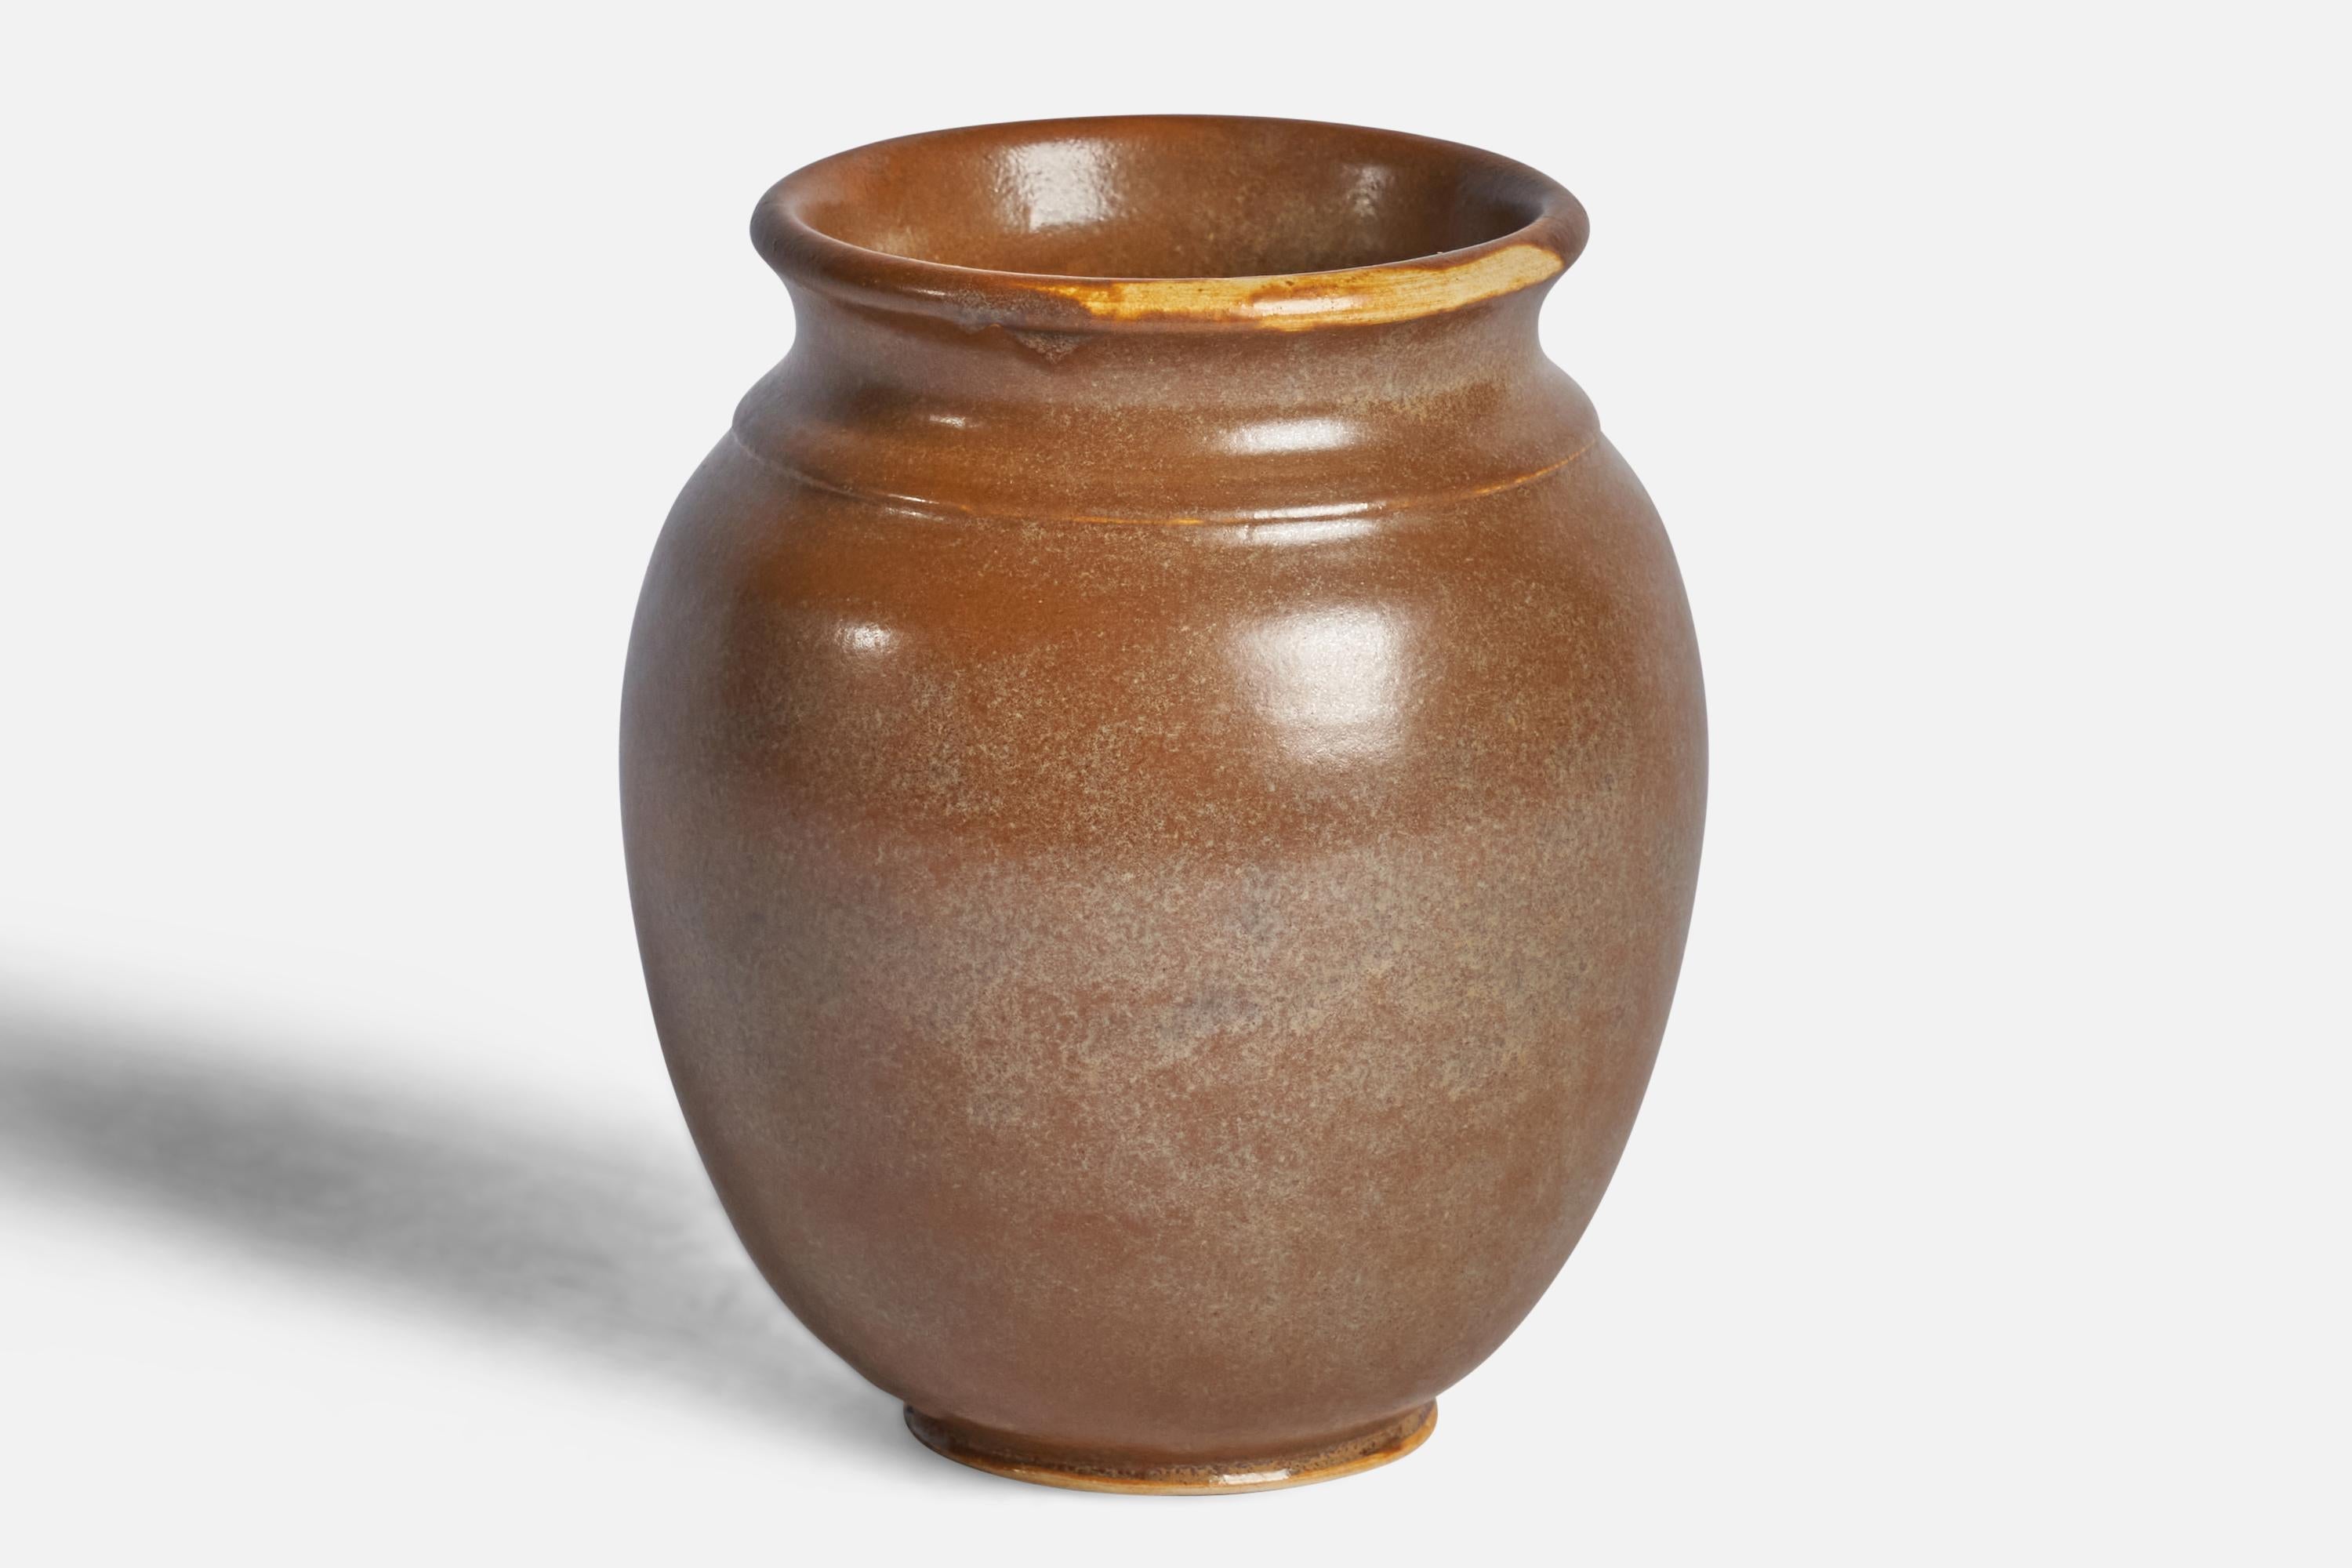 A brown-glazed stoneware vase designed and produced by Höganäs Keramik, Sweden, c. 1960s.